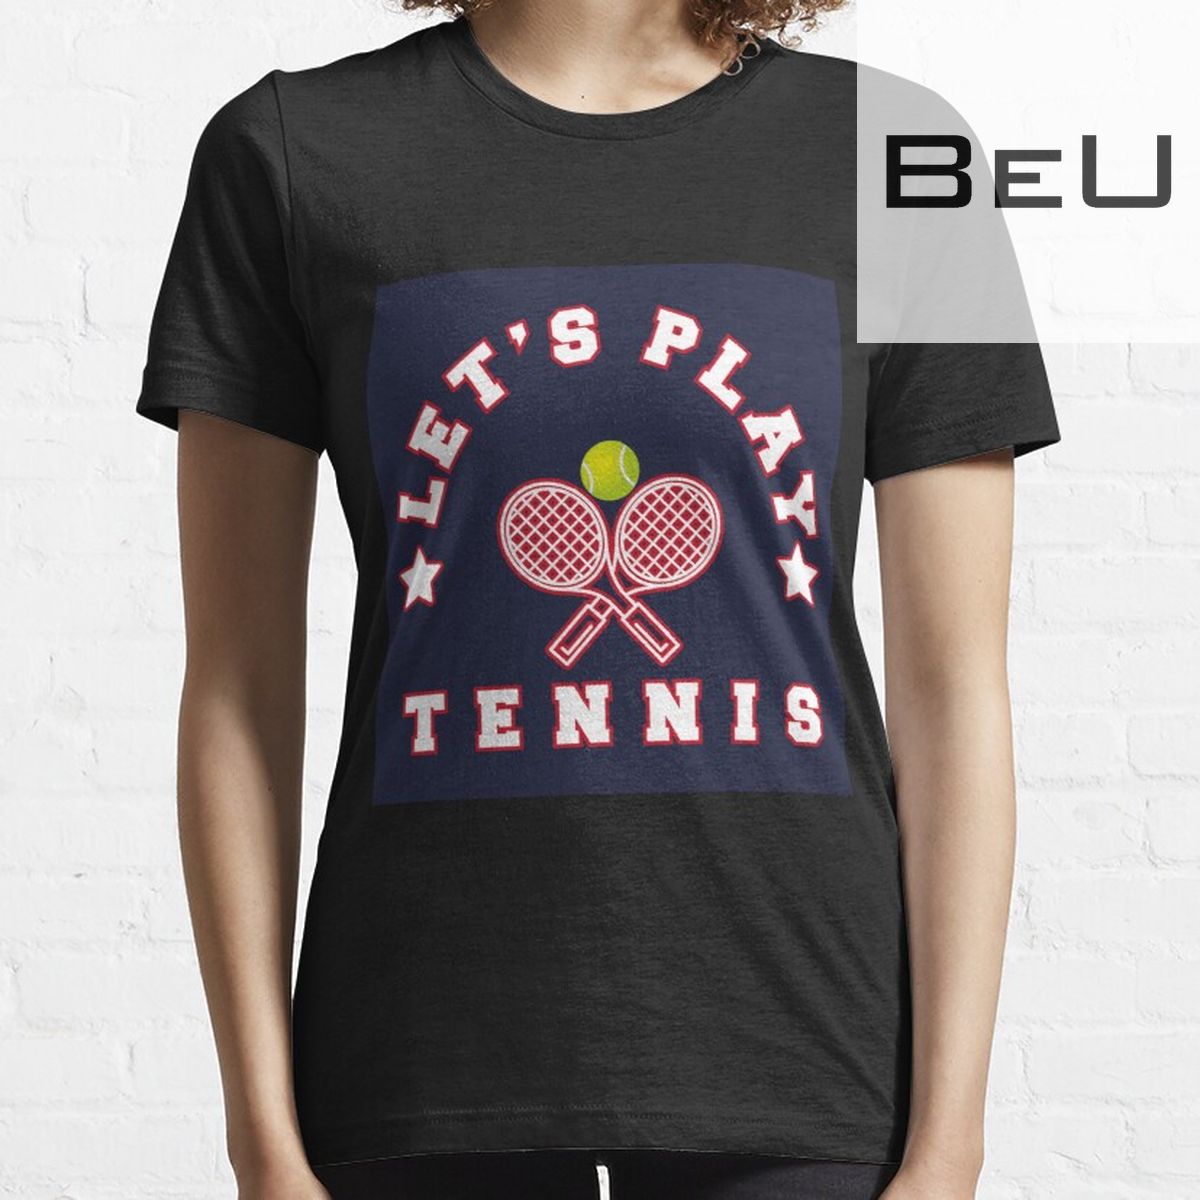 Let's Play Tennis Sticker T-shirt